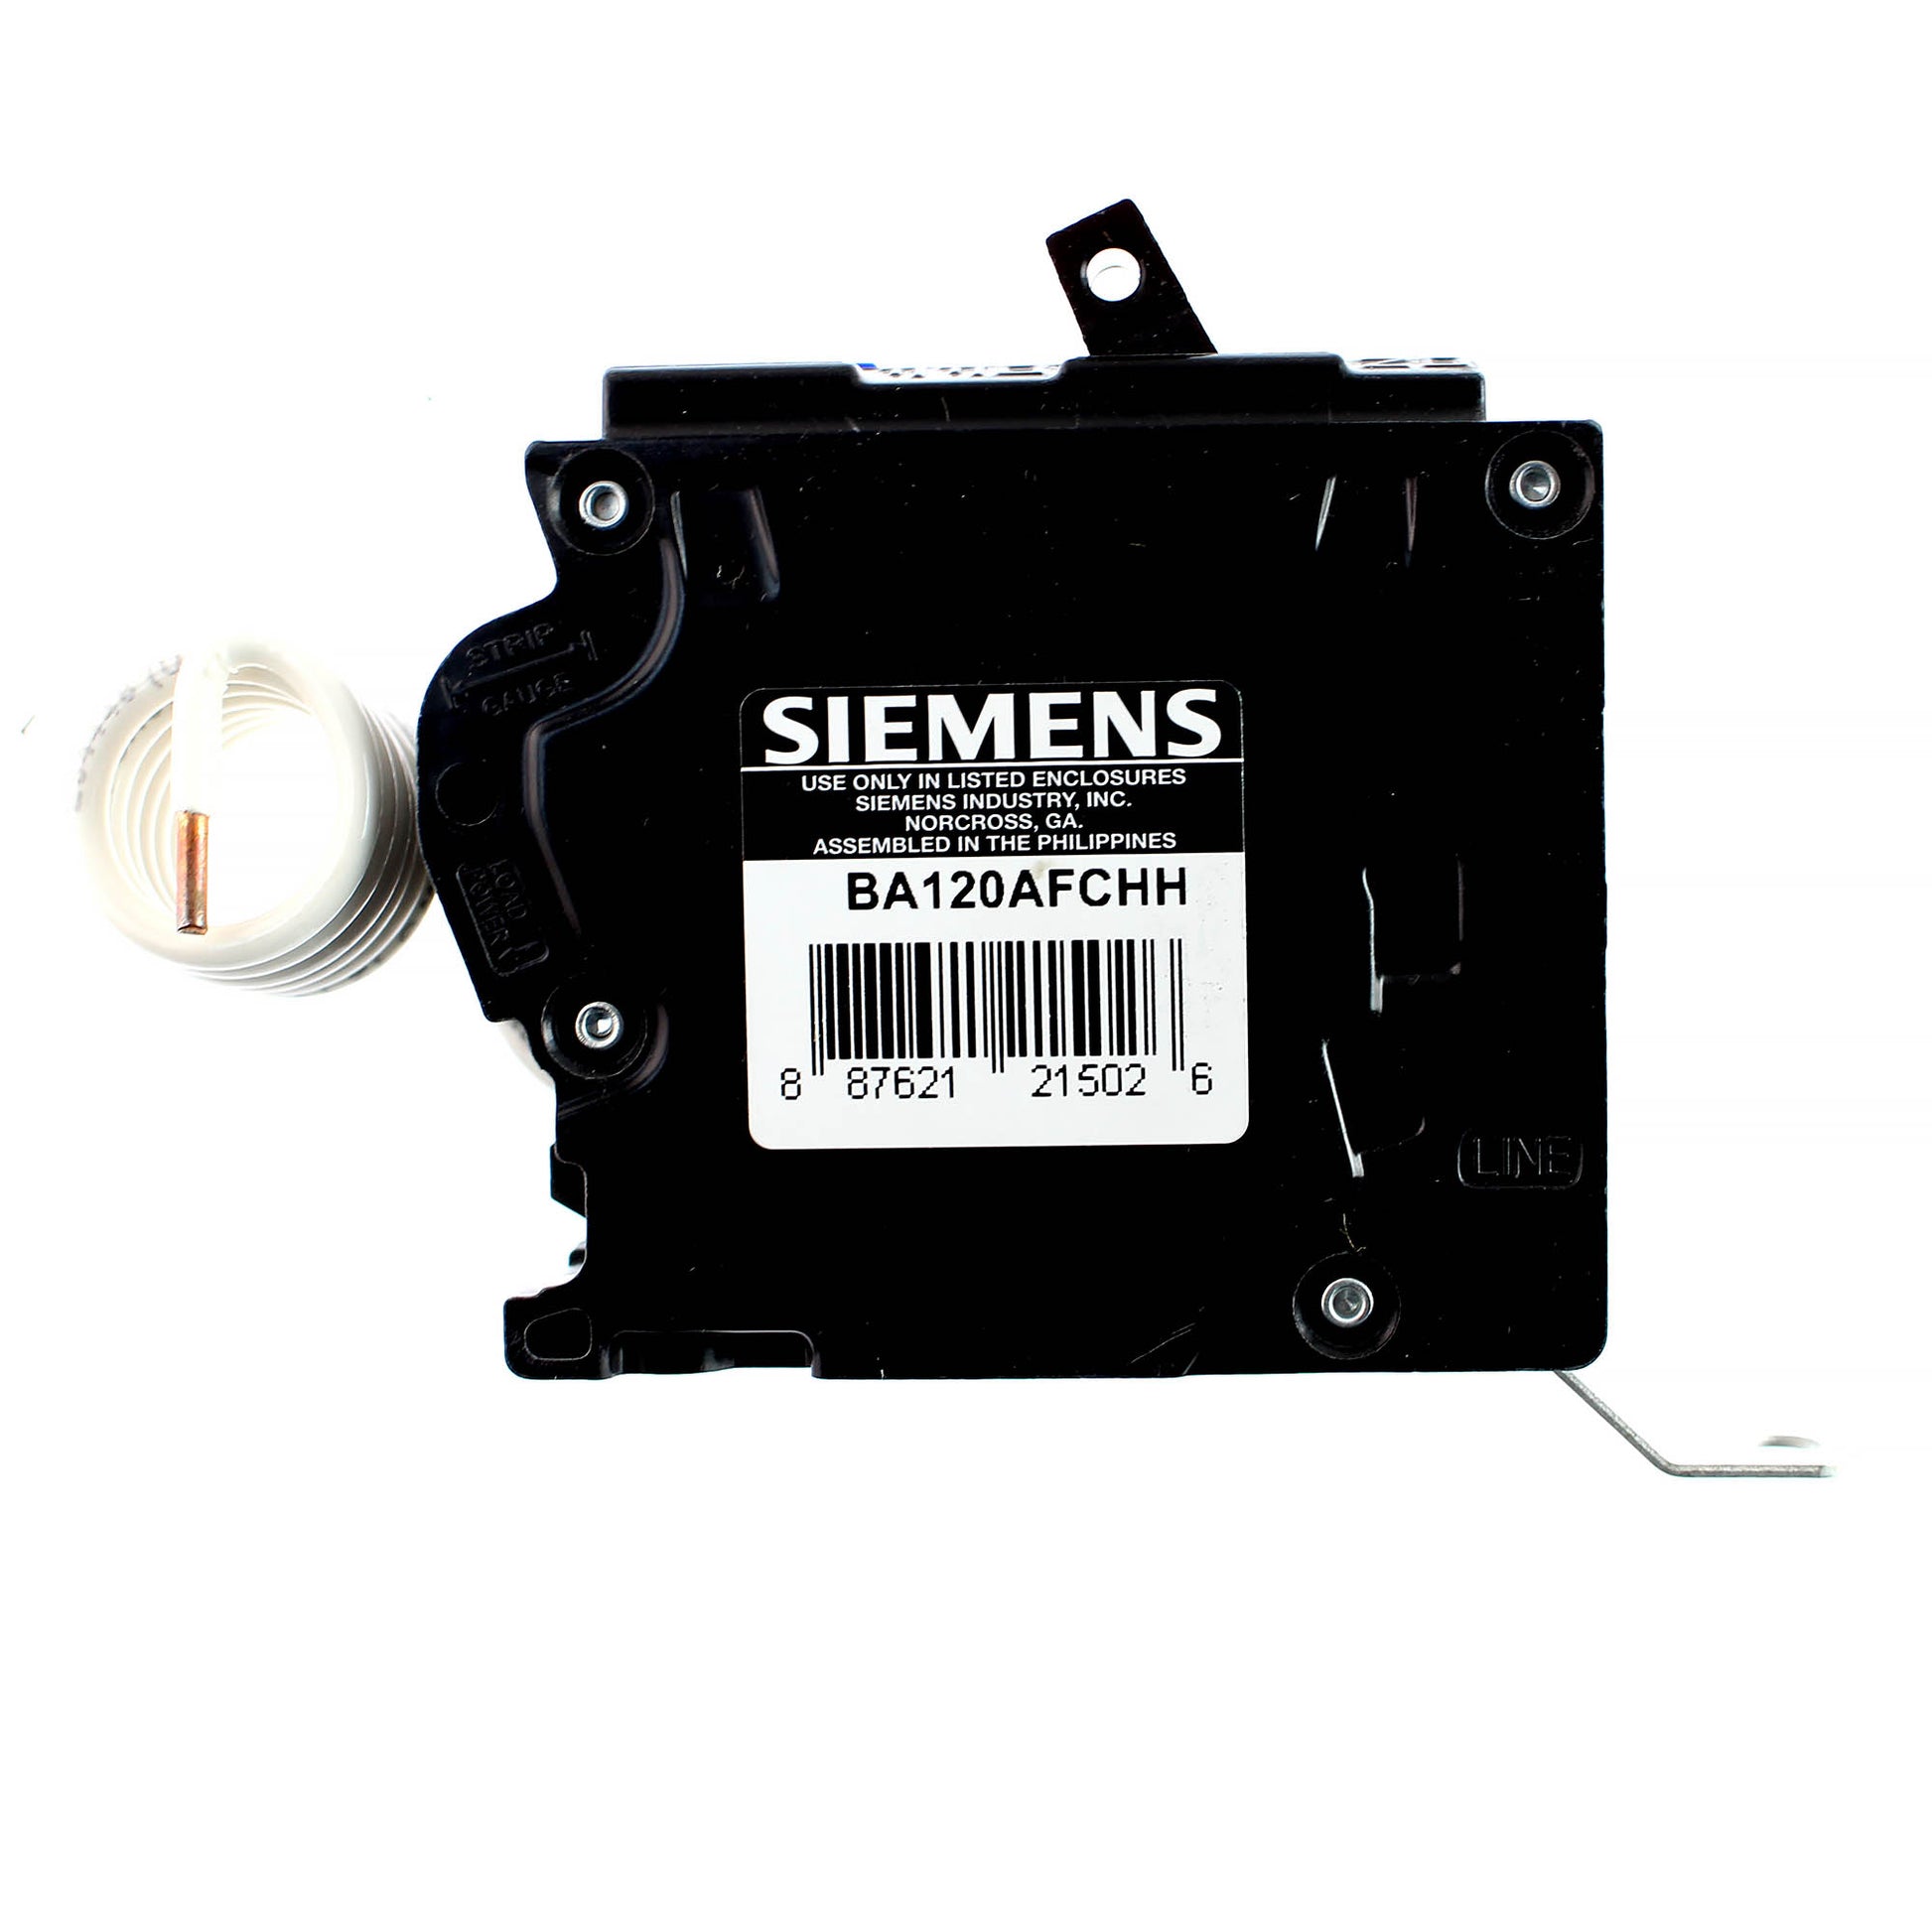 Siemens BA120AFCHH